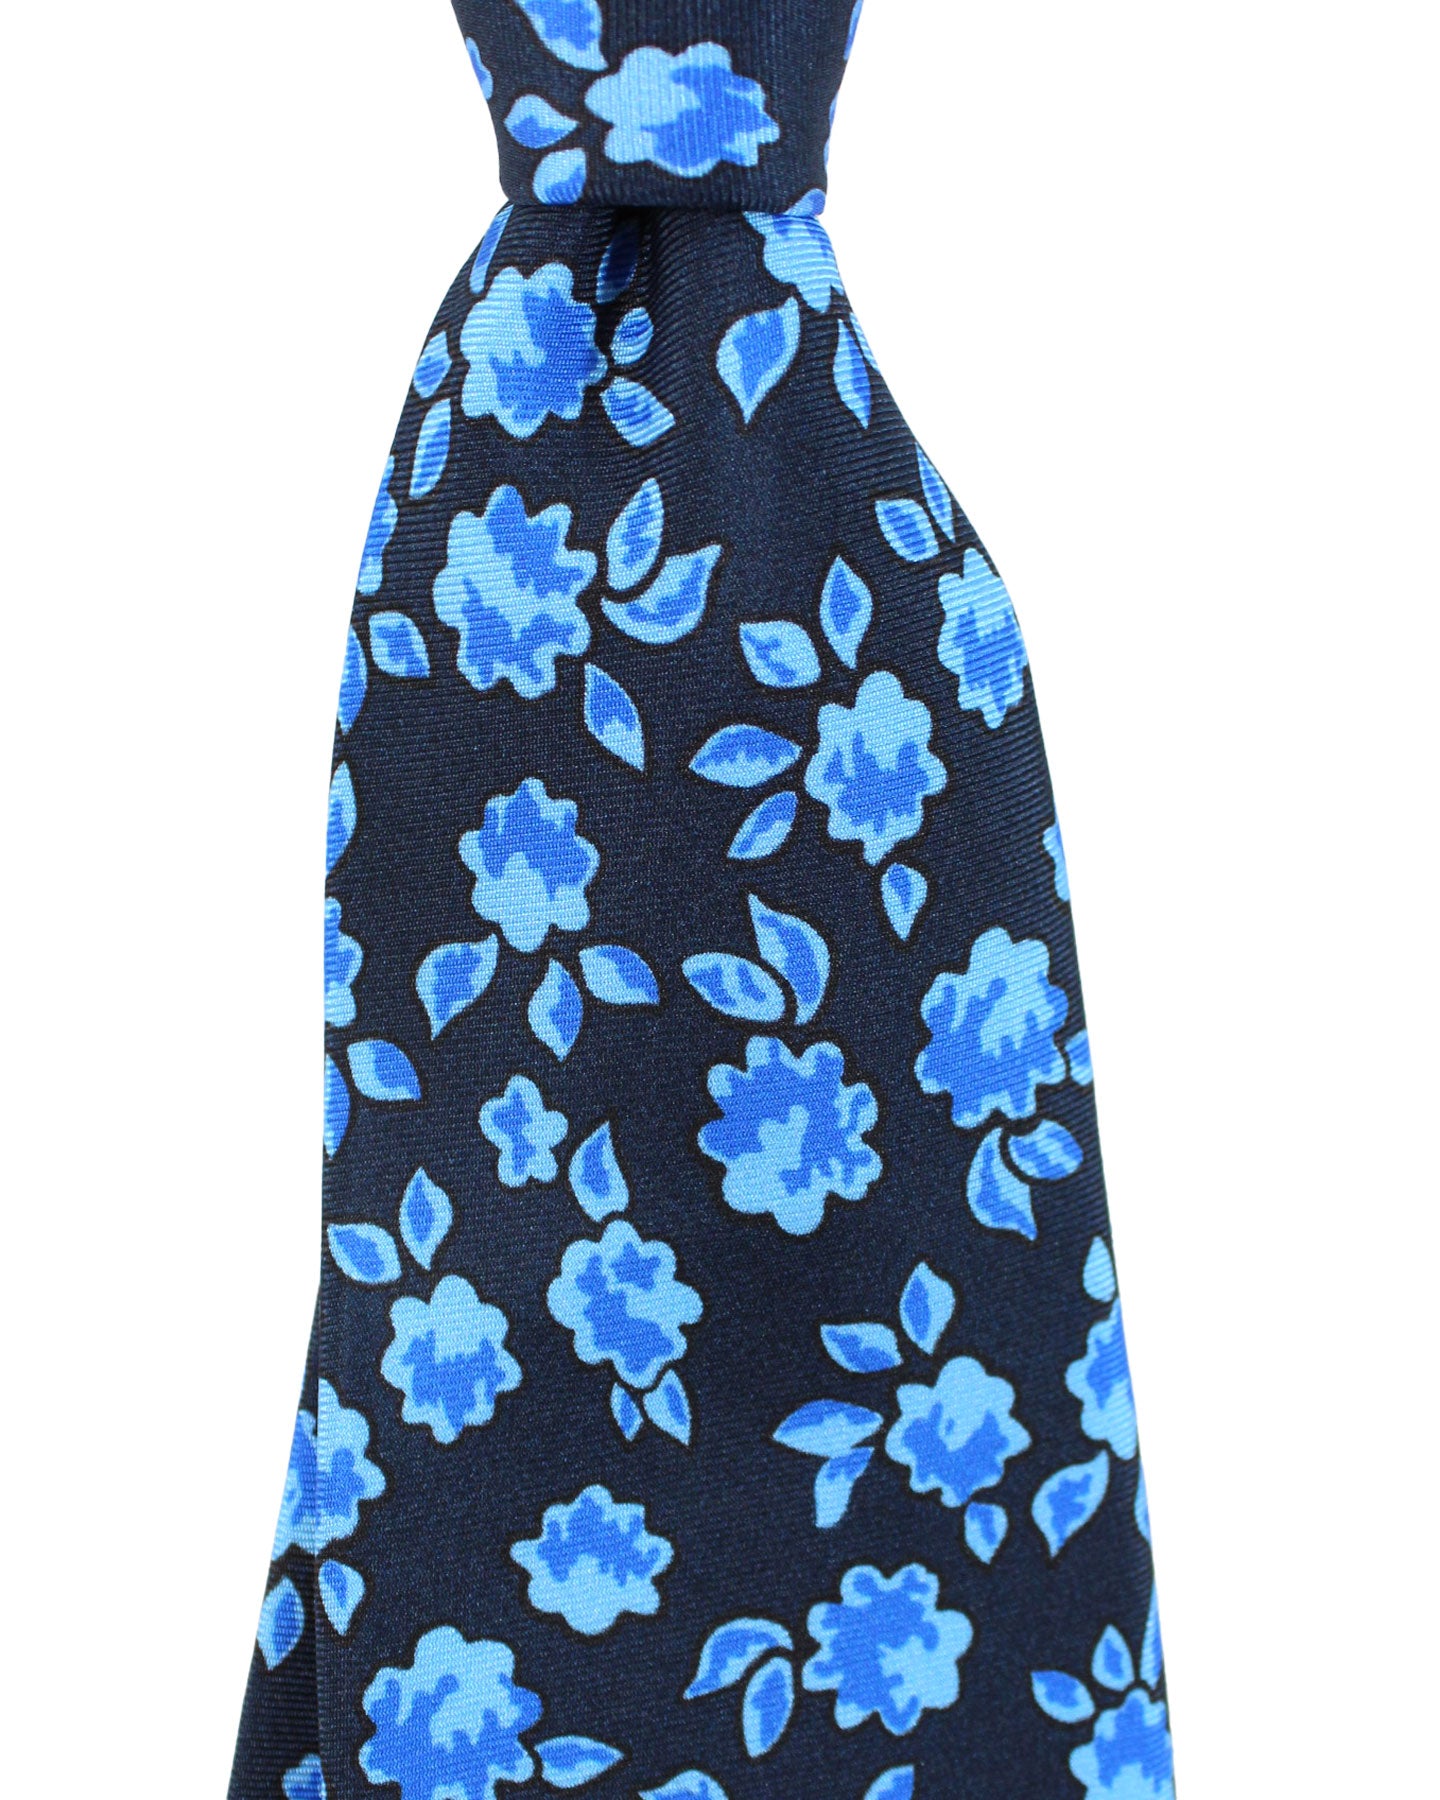 Massimo Valeri 11 Fold Tie Navy Blue Floral - Elevenfold Necktie